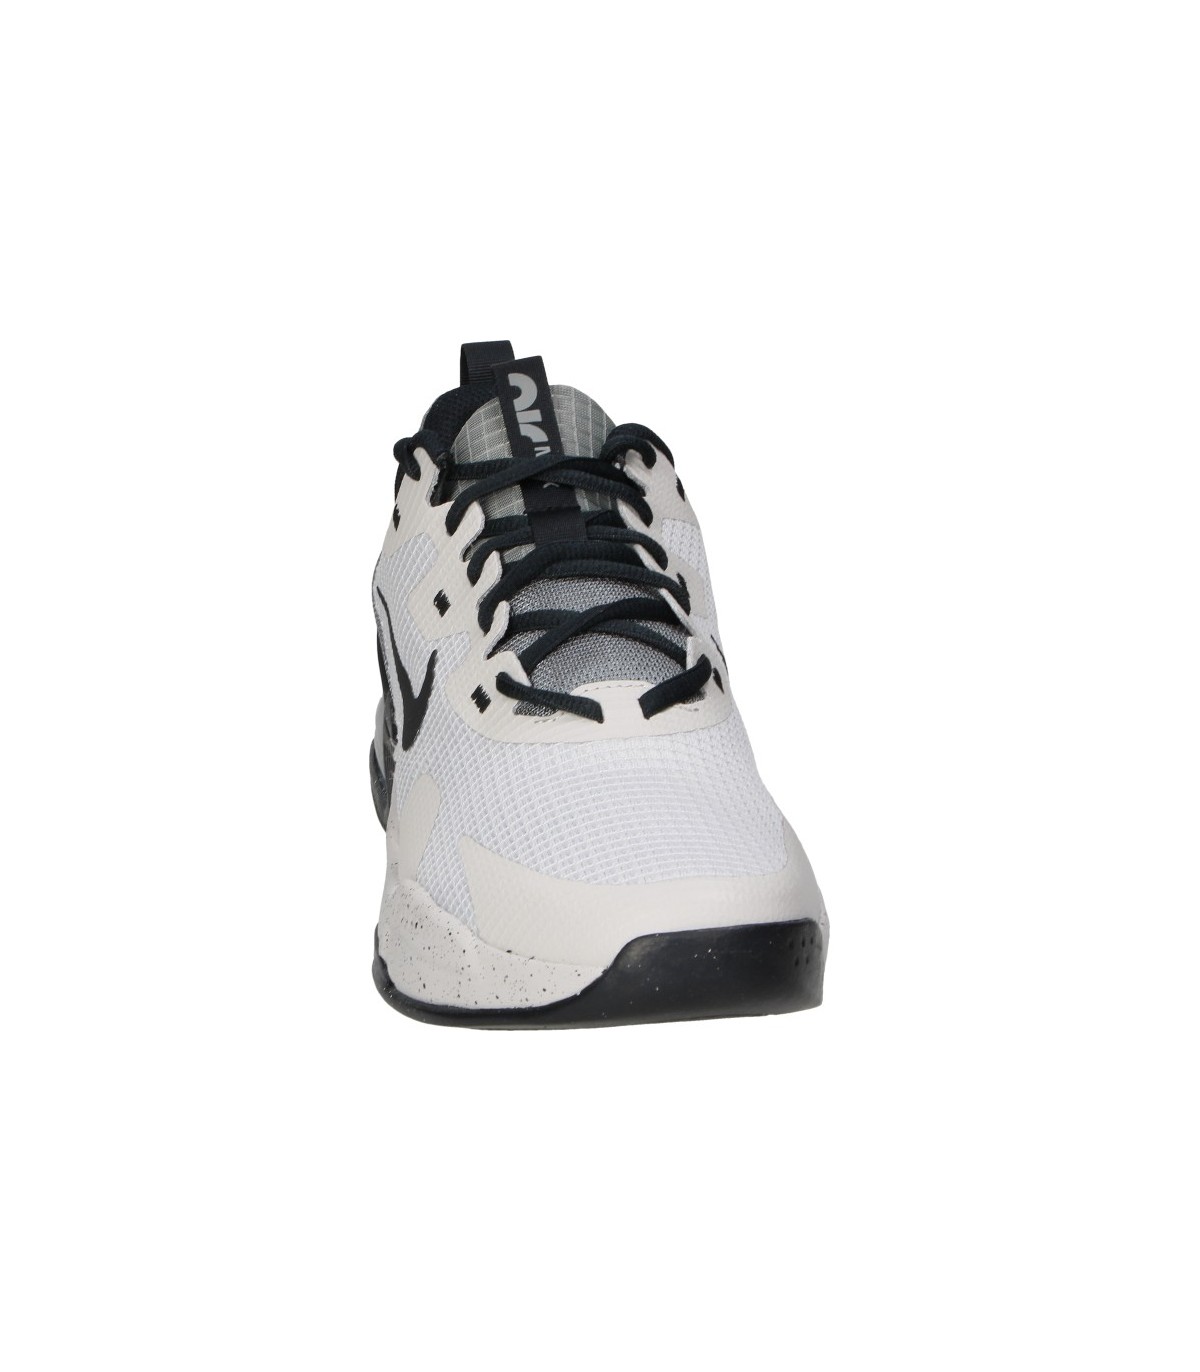 Zapatillas negras para hombre Nike Air Max SC online en MEGACALZADO